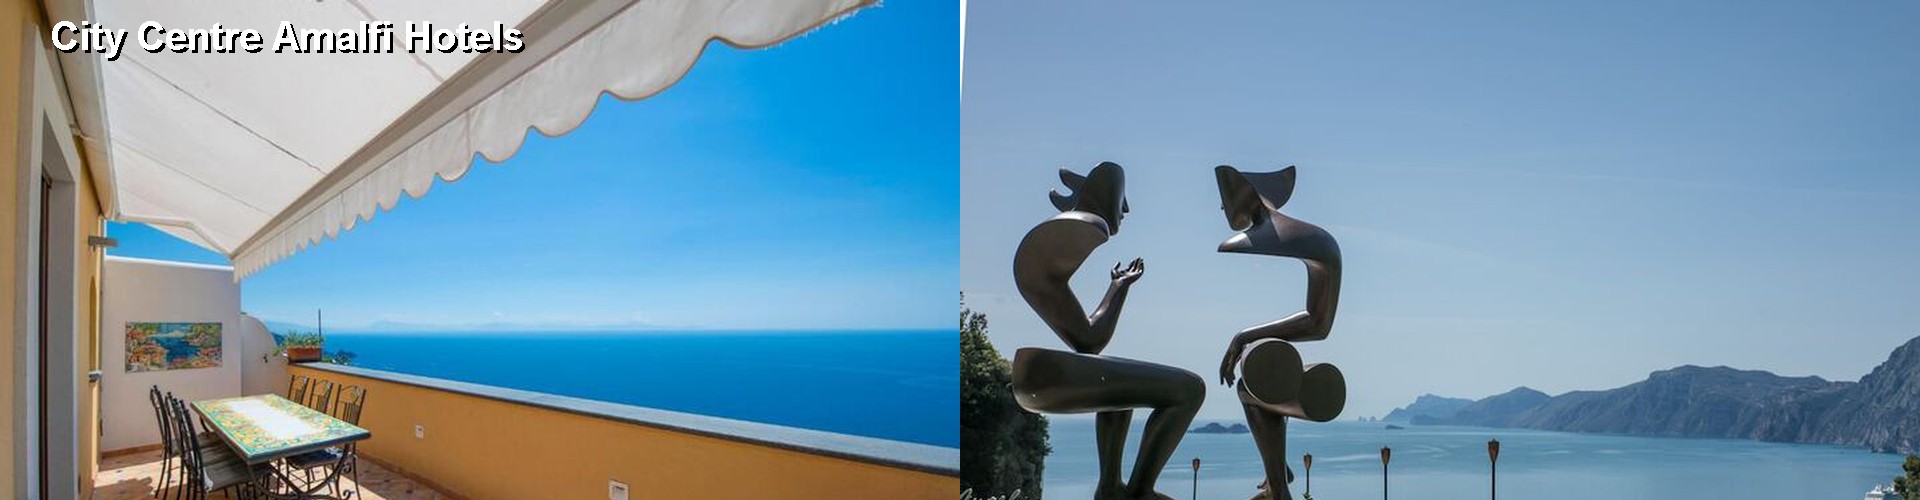 5 Best Hotels near City Centre Amalfi